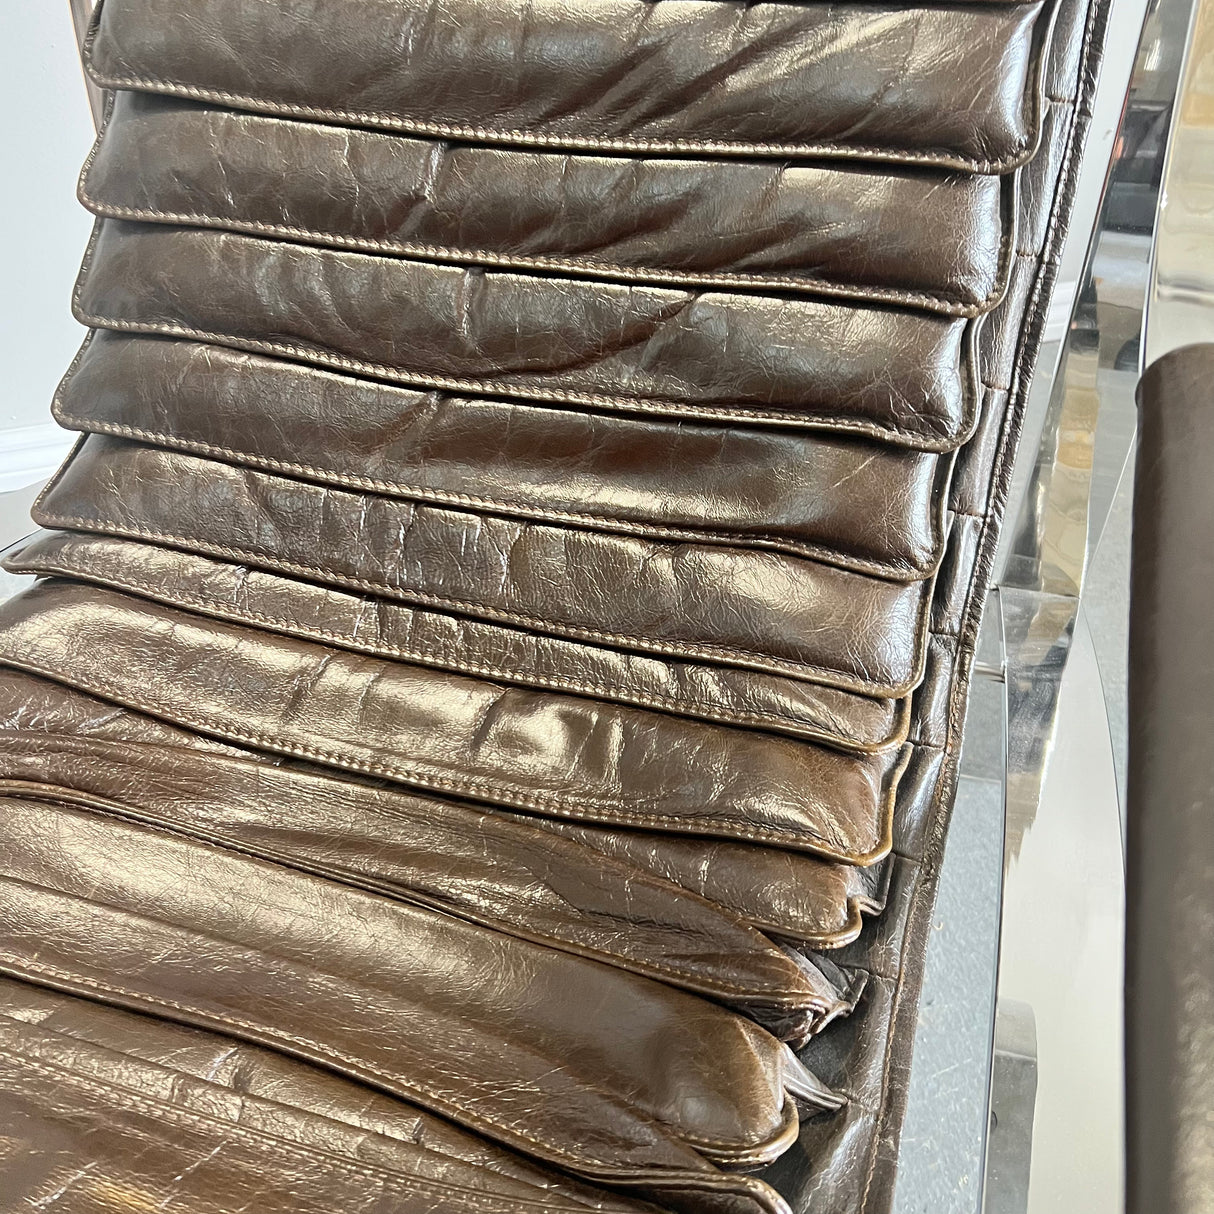 Arhaus Harlow Mid Century Chrome & Leather Arm Chairs